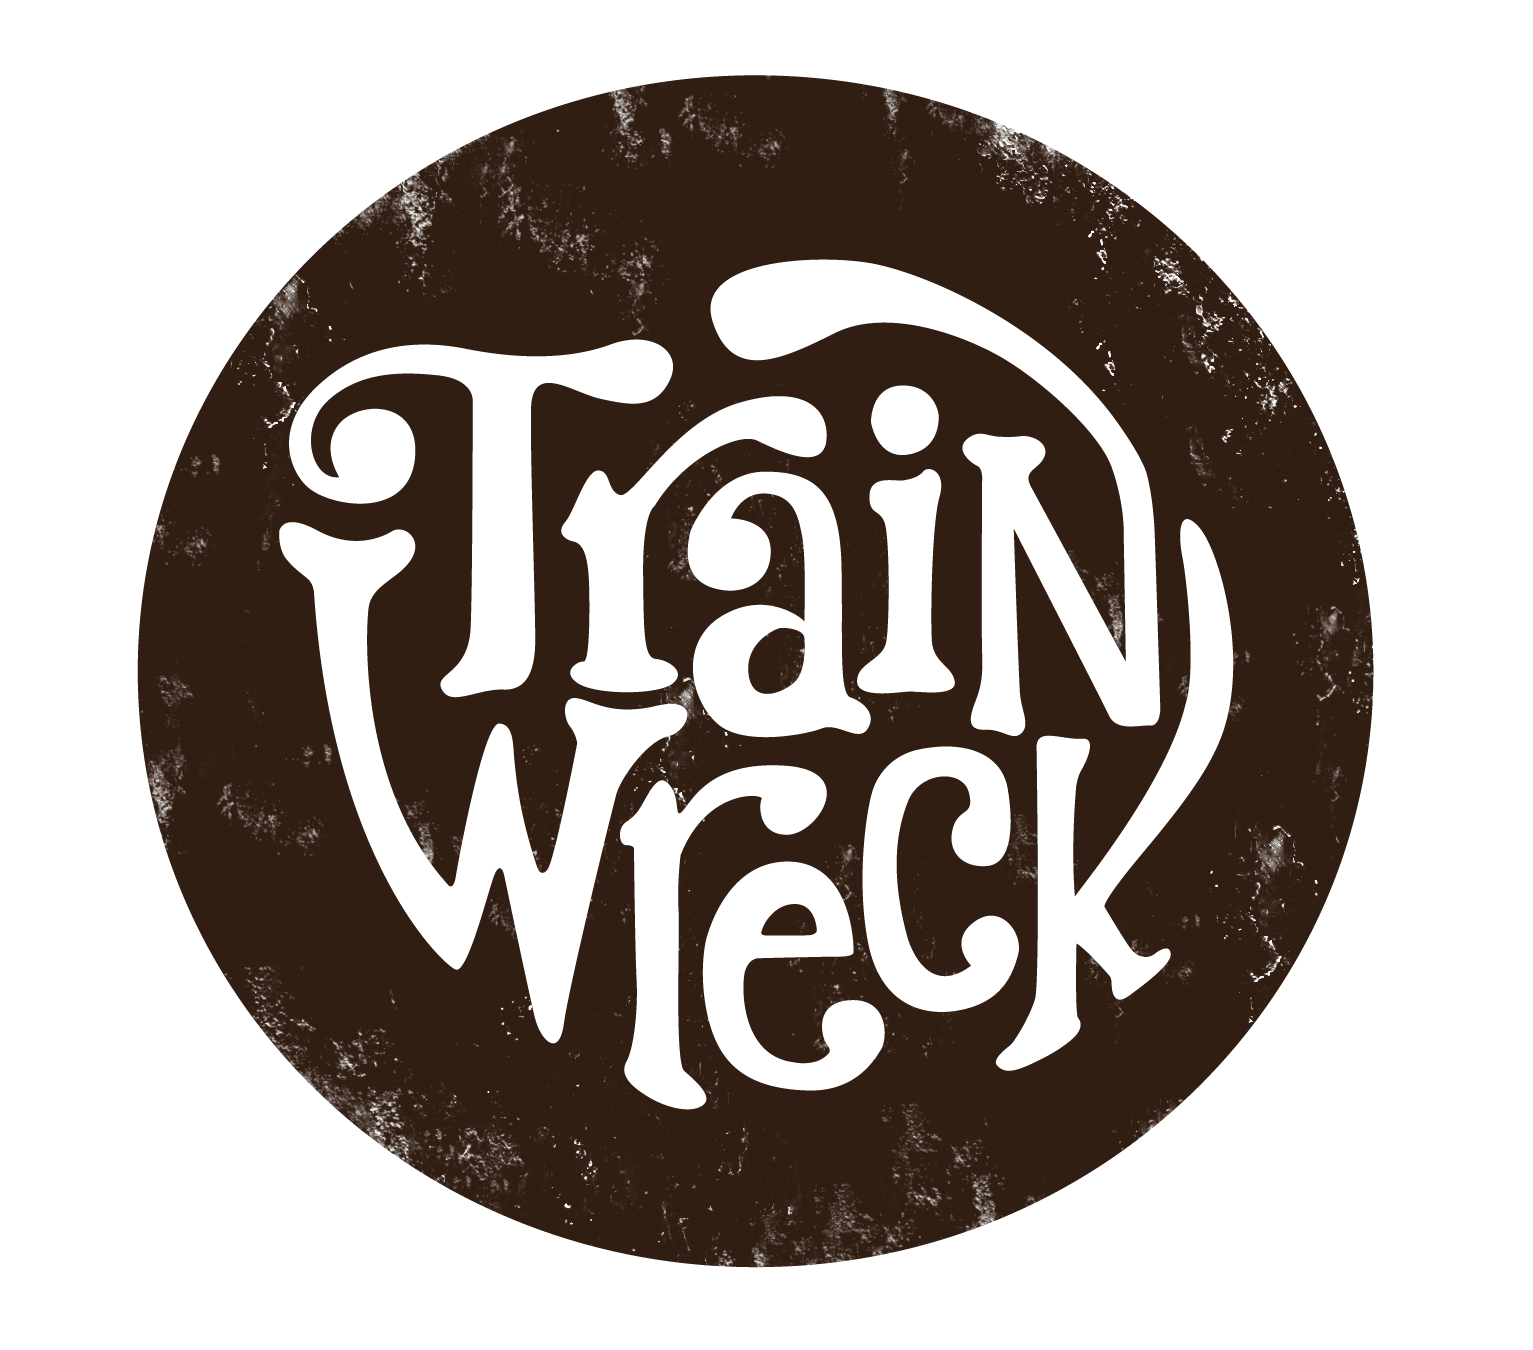 Wreck Logo - harvill.: Train Wreck Logo Exploration